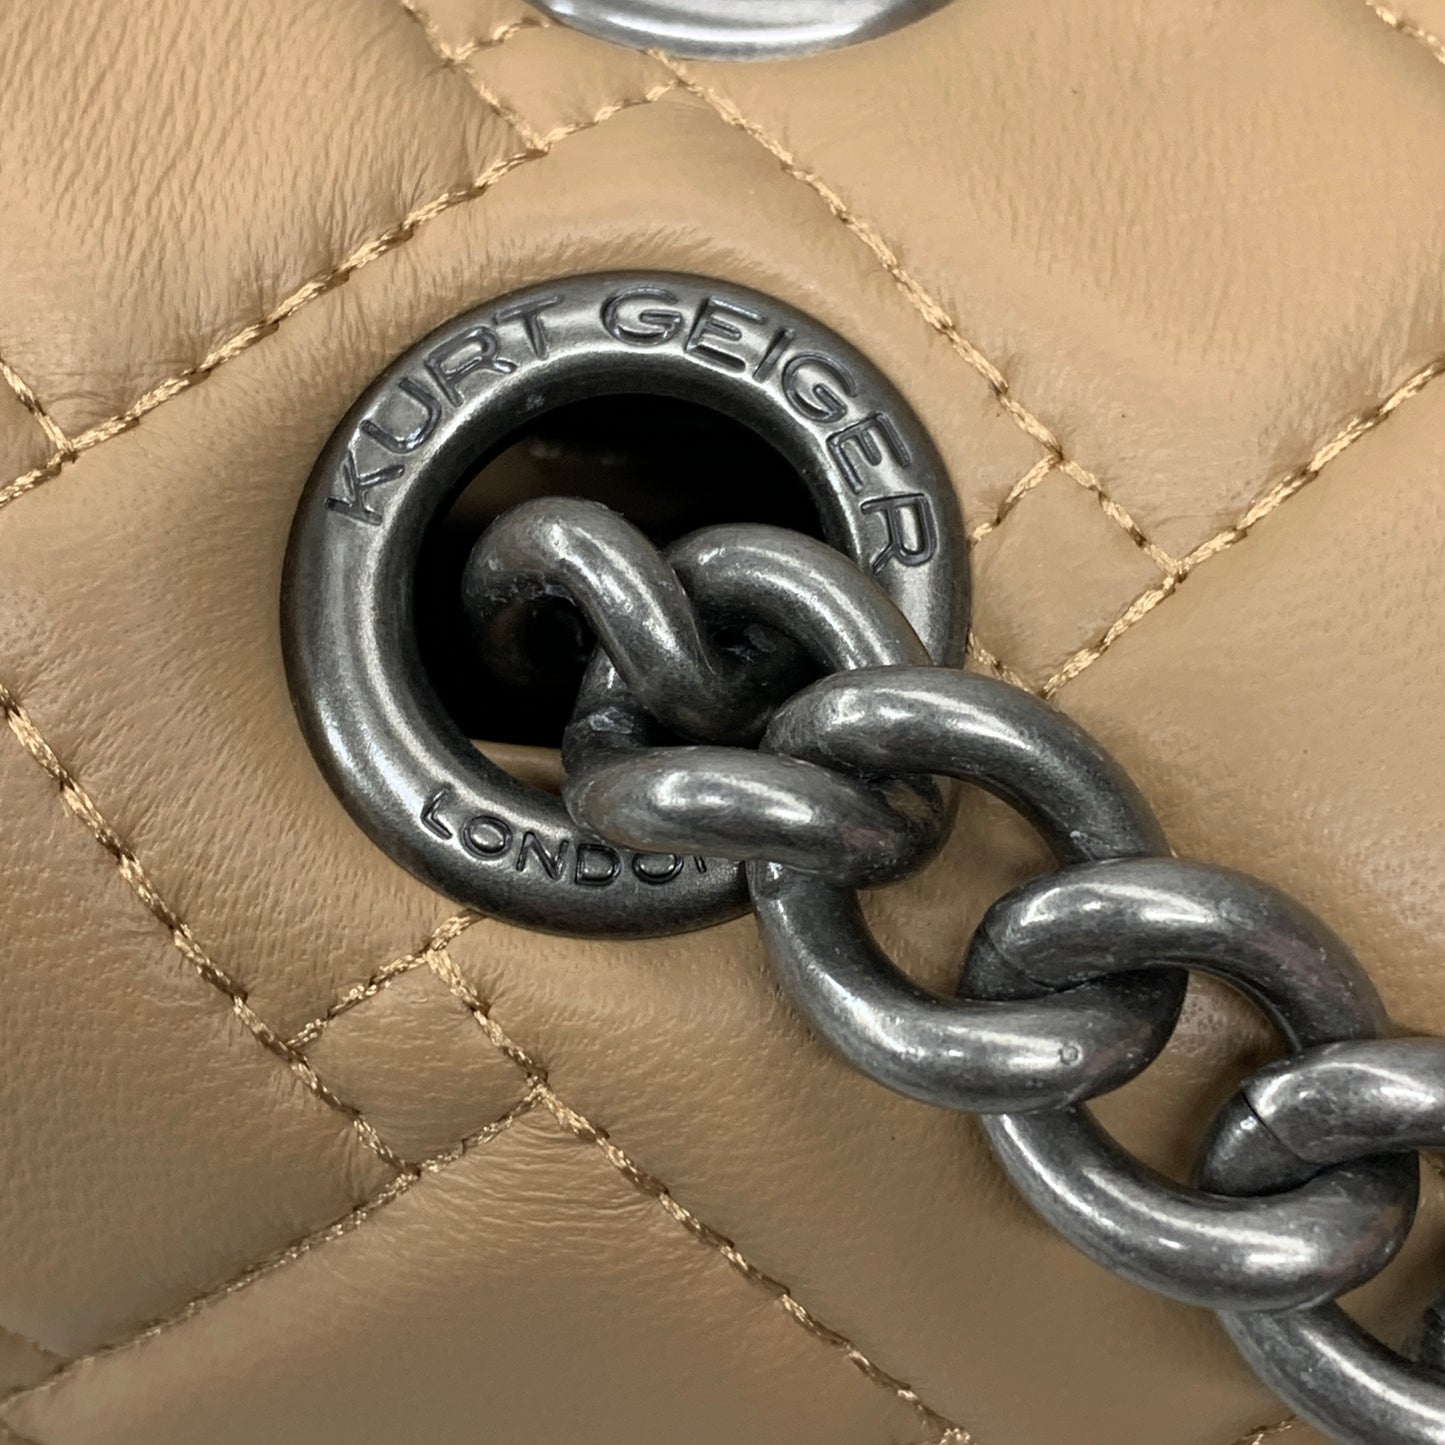 KURT GEIGER Kensington Leather X Bag 10.5" x 7" Camel 1470448109 New